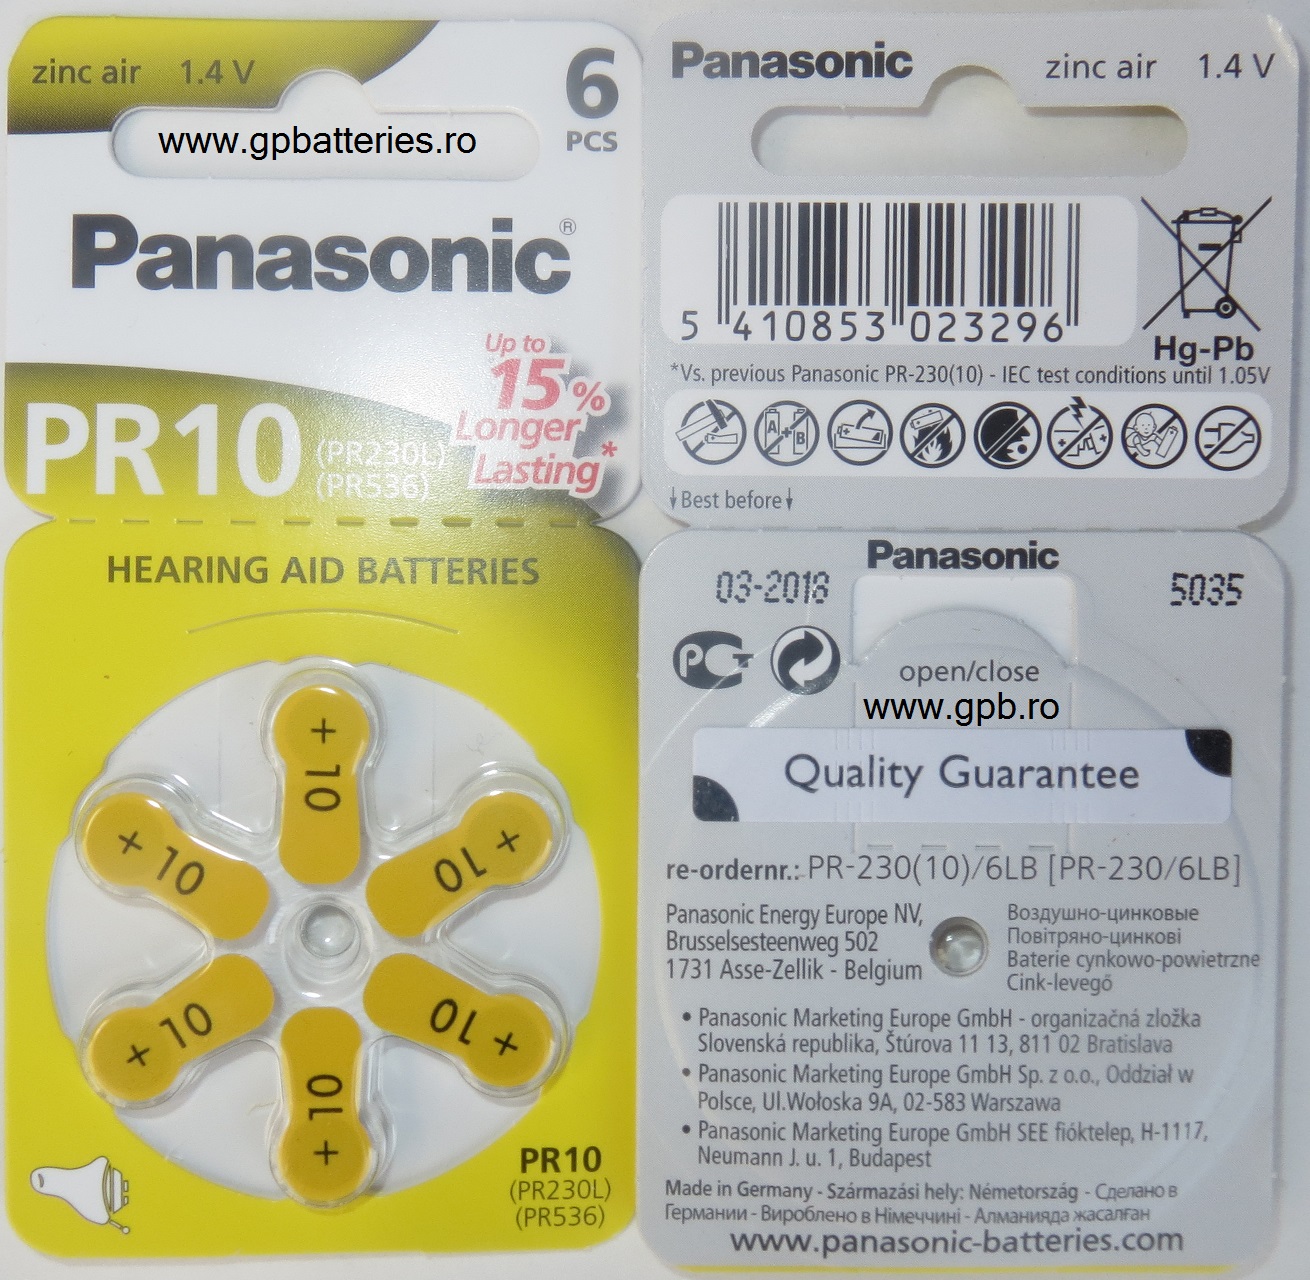 Panasonic baterie zinc-aer ZA10